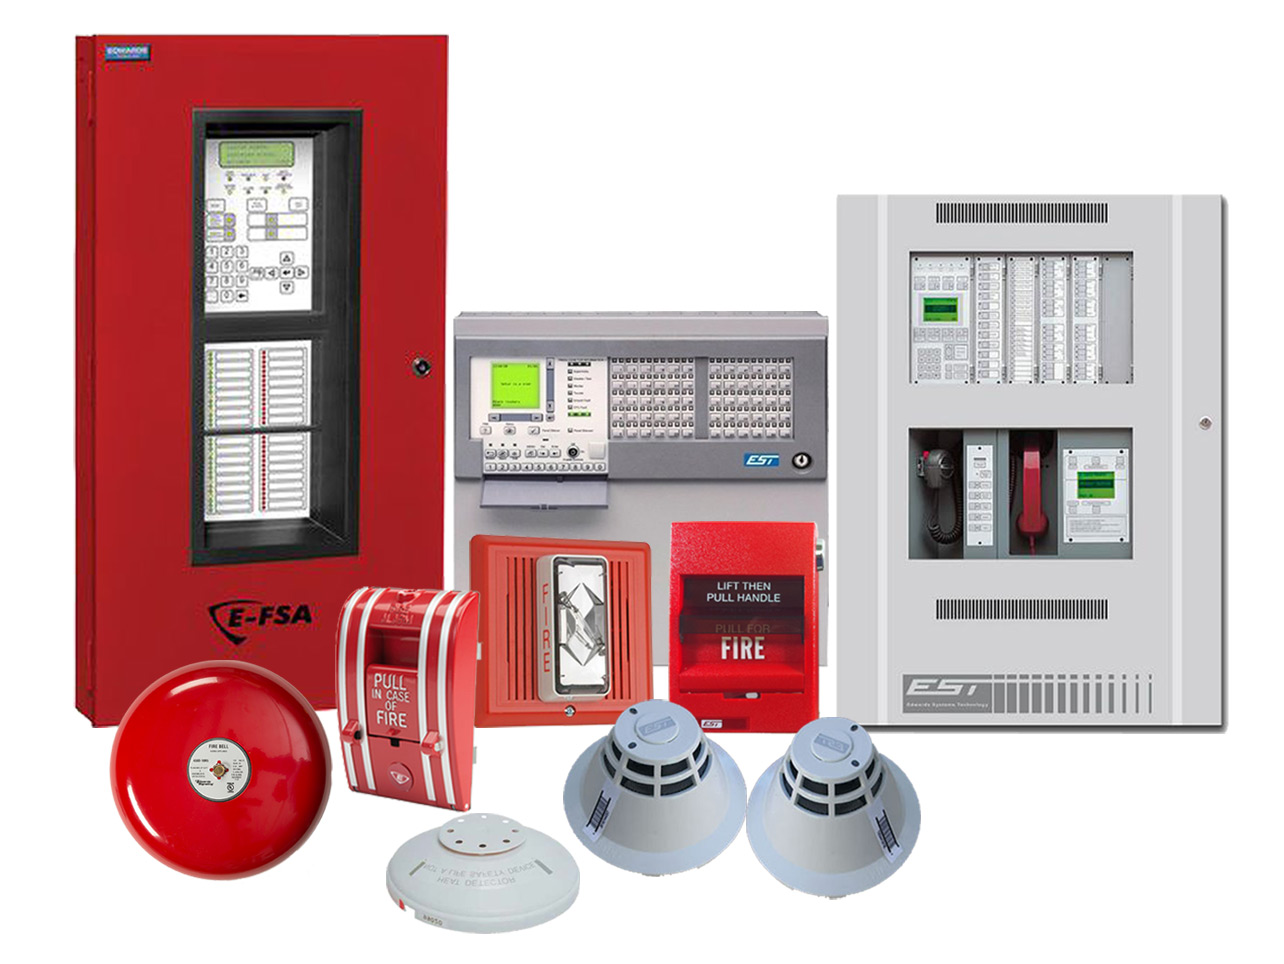 Fire Alarm Companies in Dubai Fire Alarm System Supplier